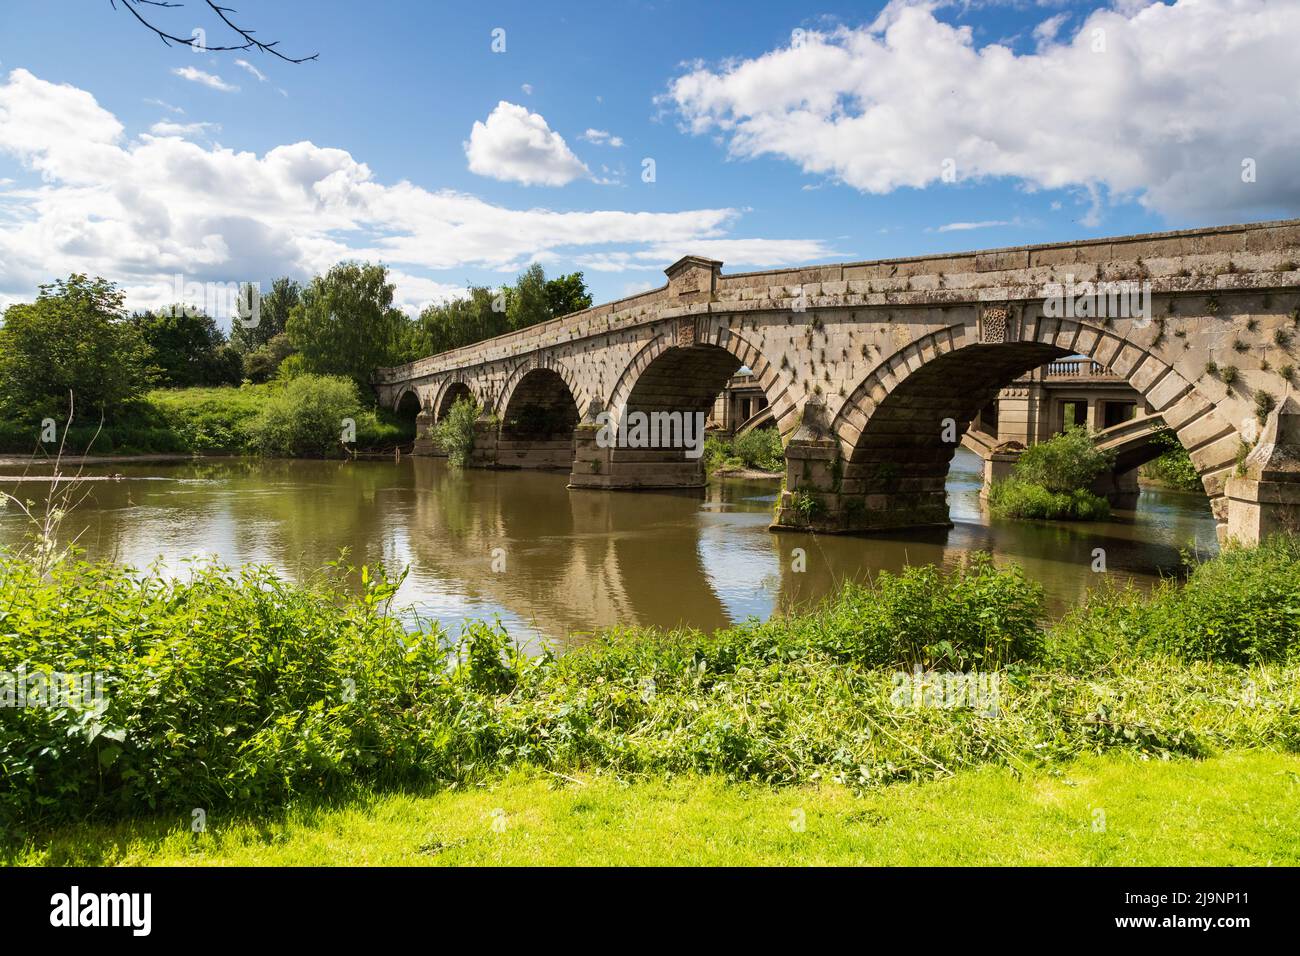 Atcham Bridge near Shrewsbury in Shropshire over the River Severn Stock Photo